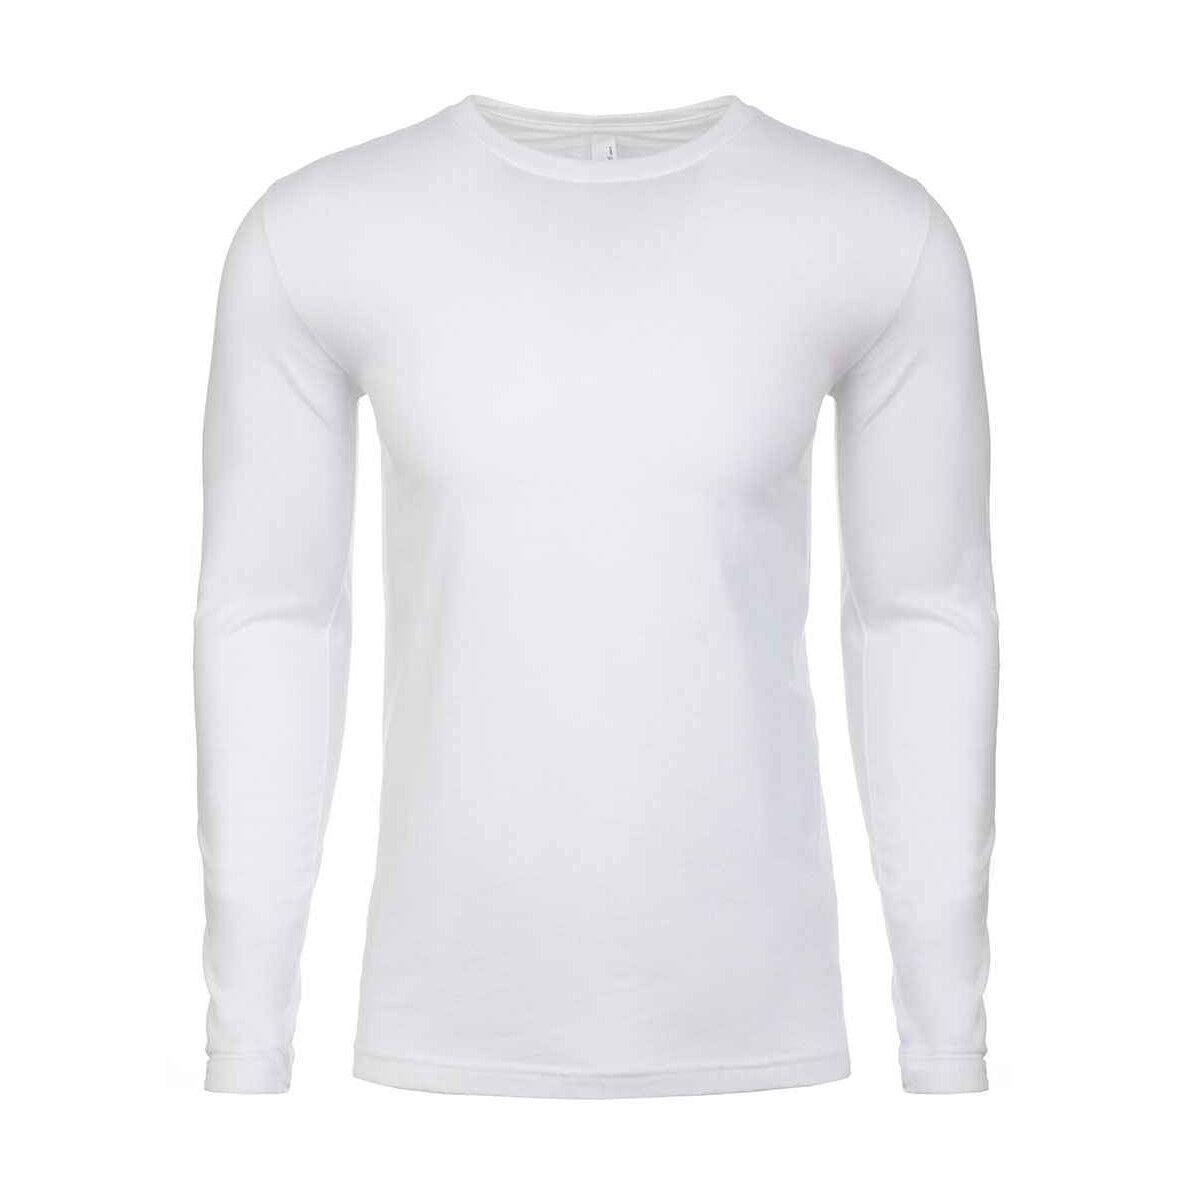 Next Level Long Sleeve Cotton T-Shirt